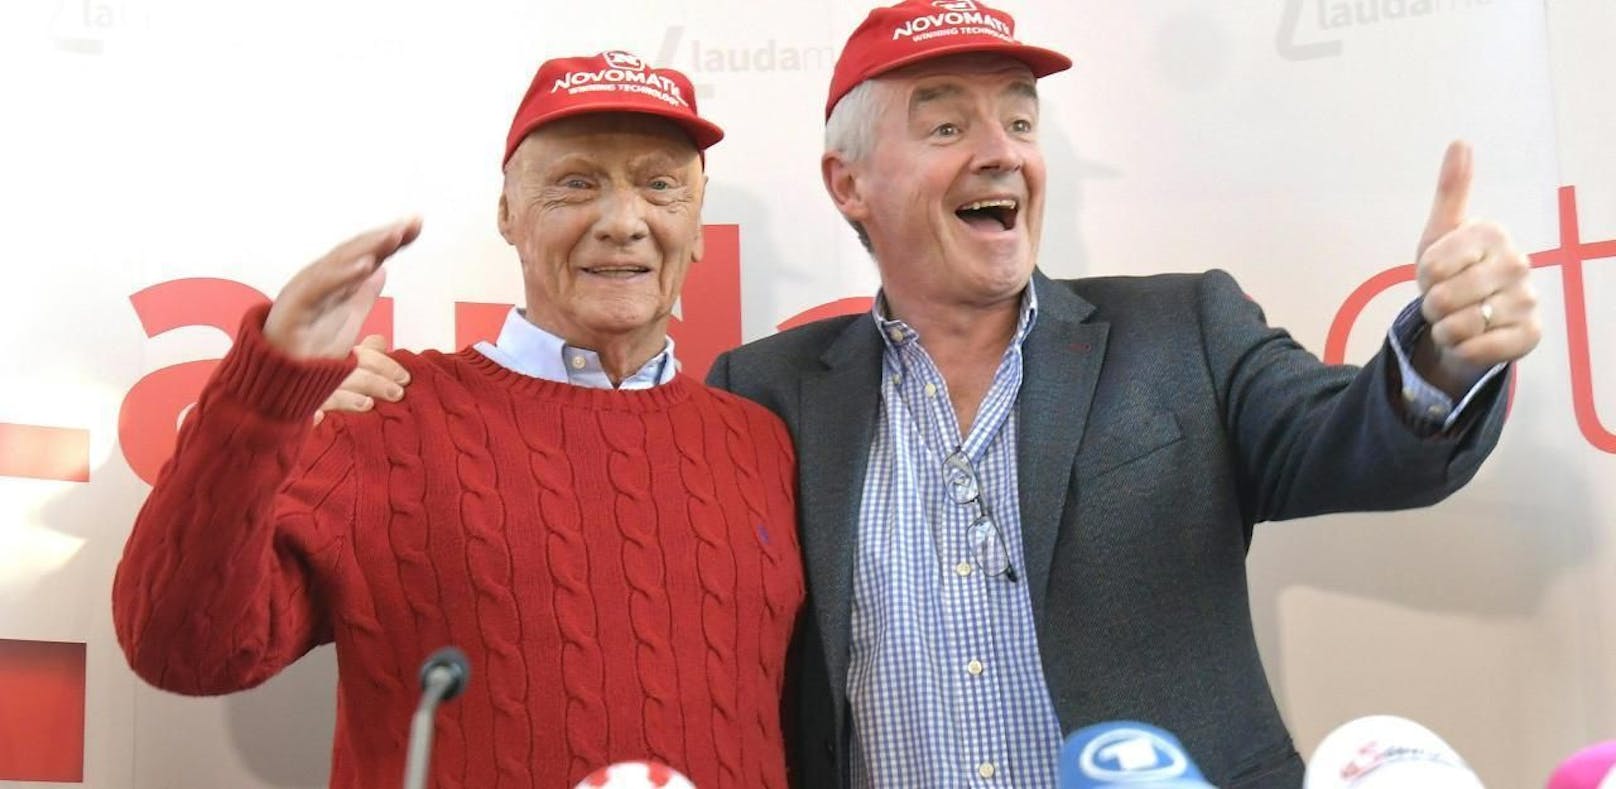 Airline-Gründer Niki Lauda und Ryanair-Chef Michael O'Leary